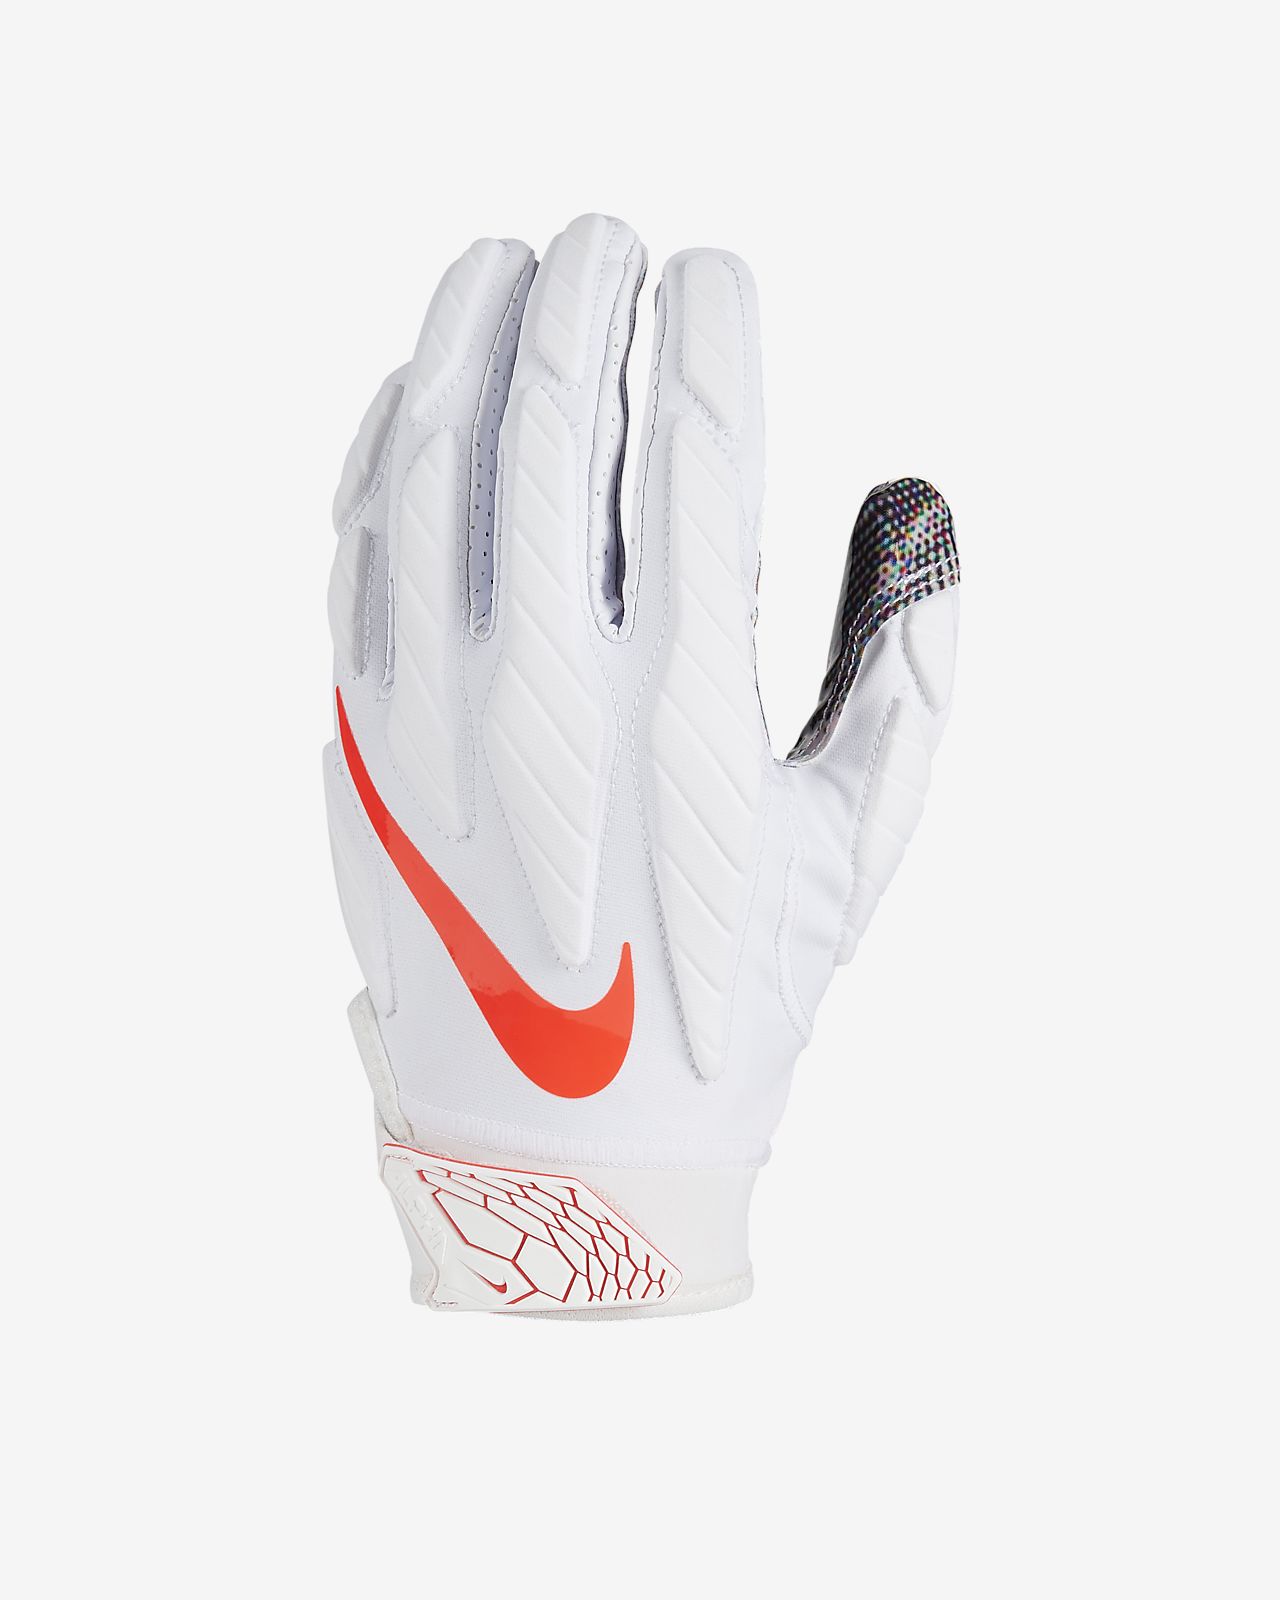 Nike Glove Size Chart Football